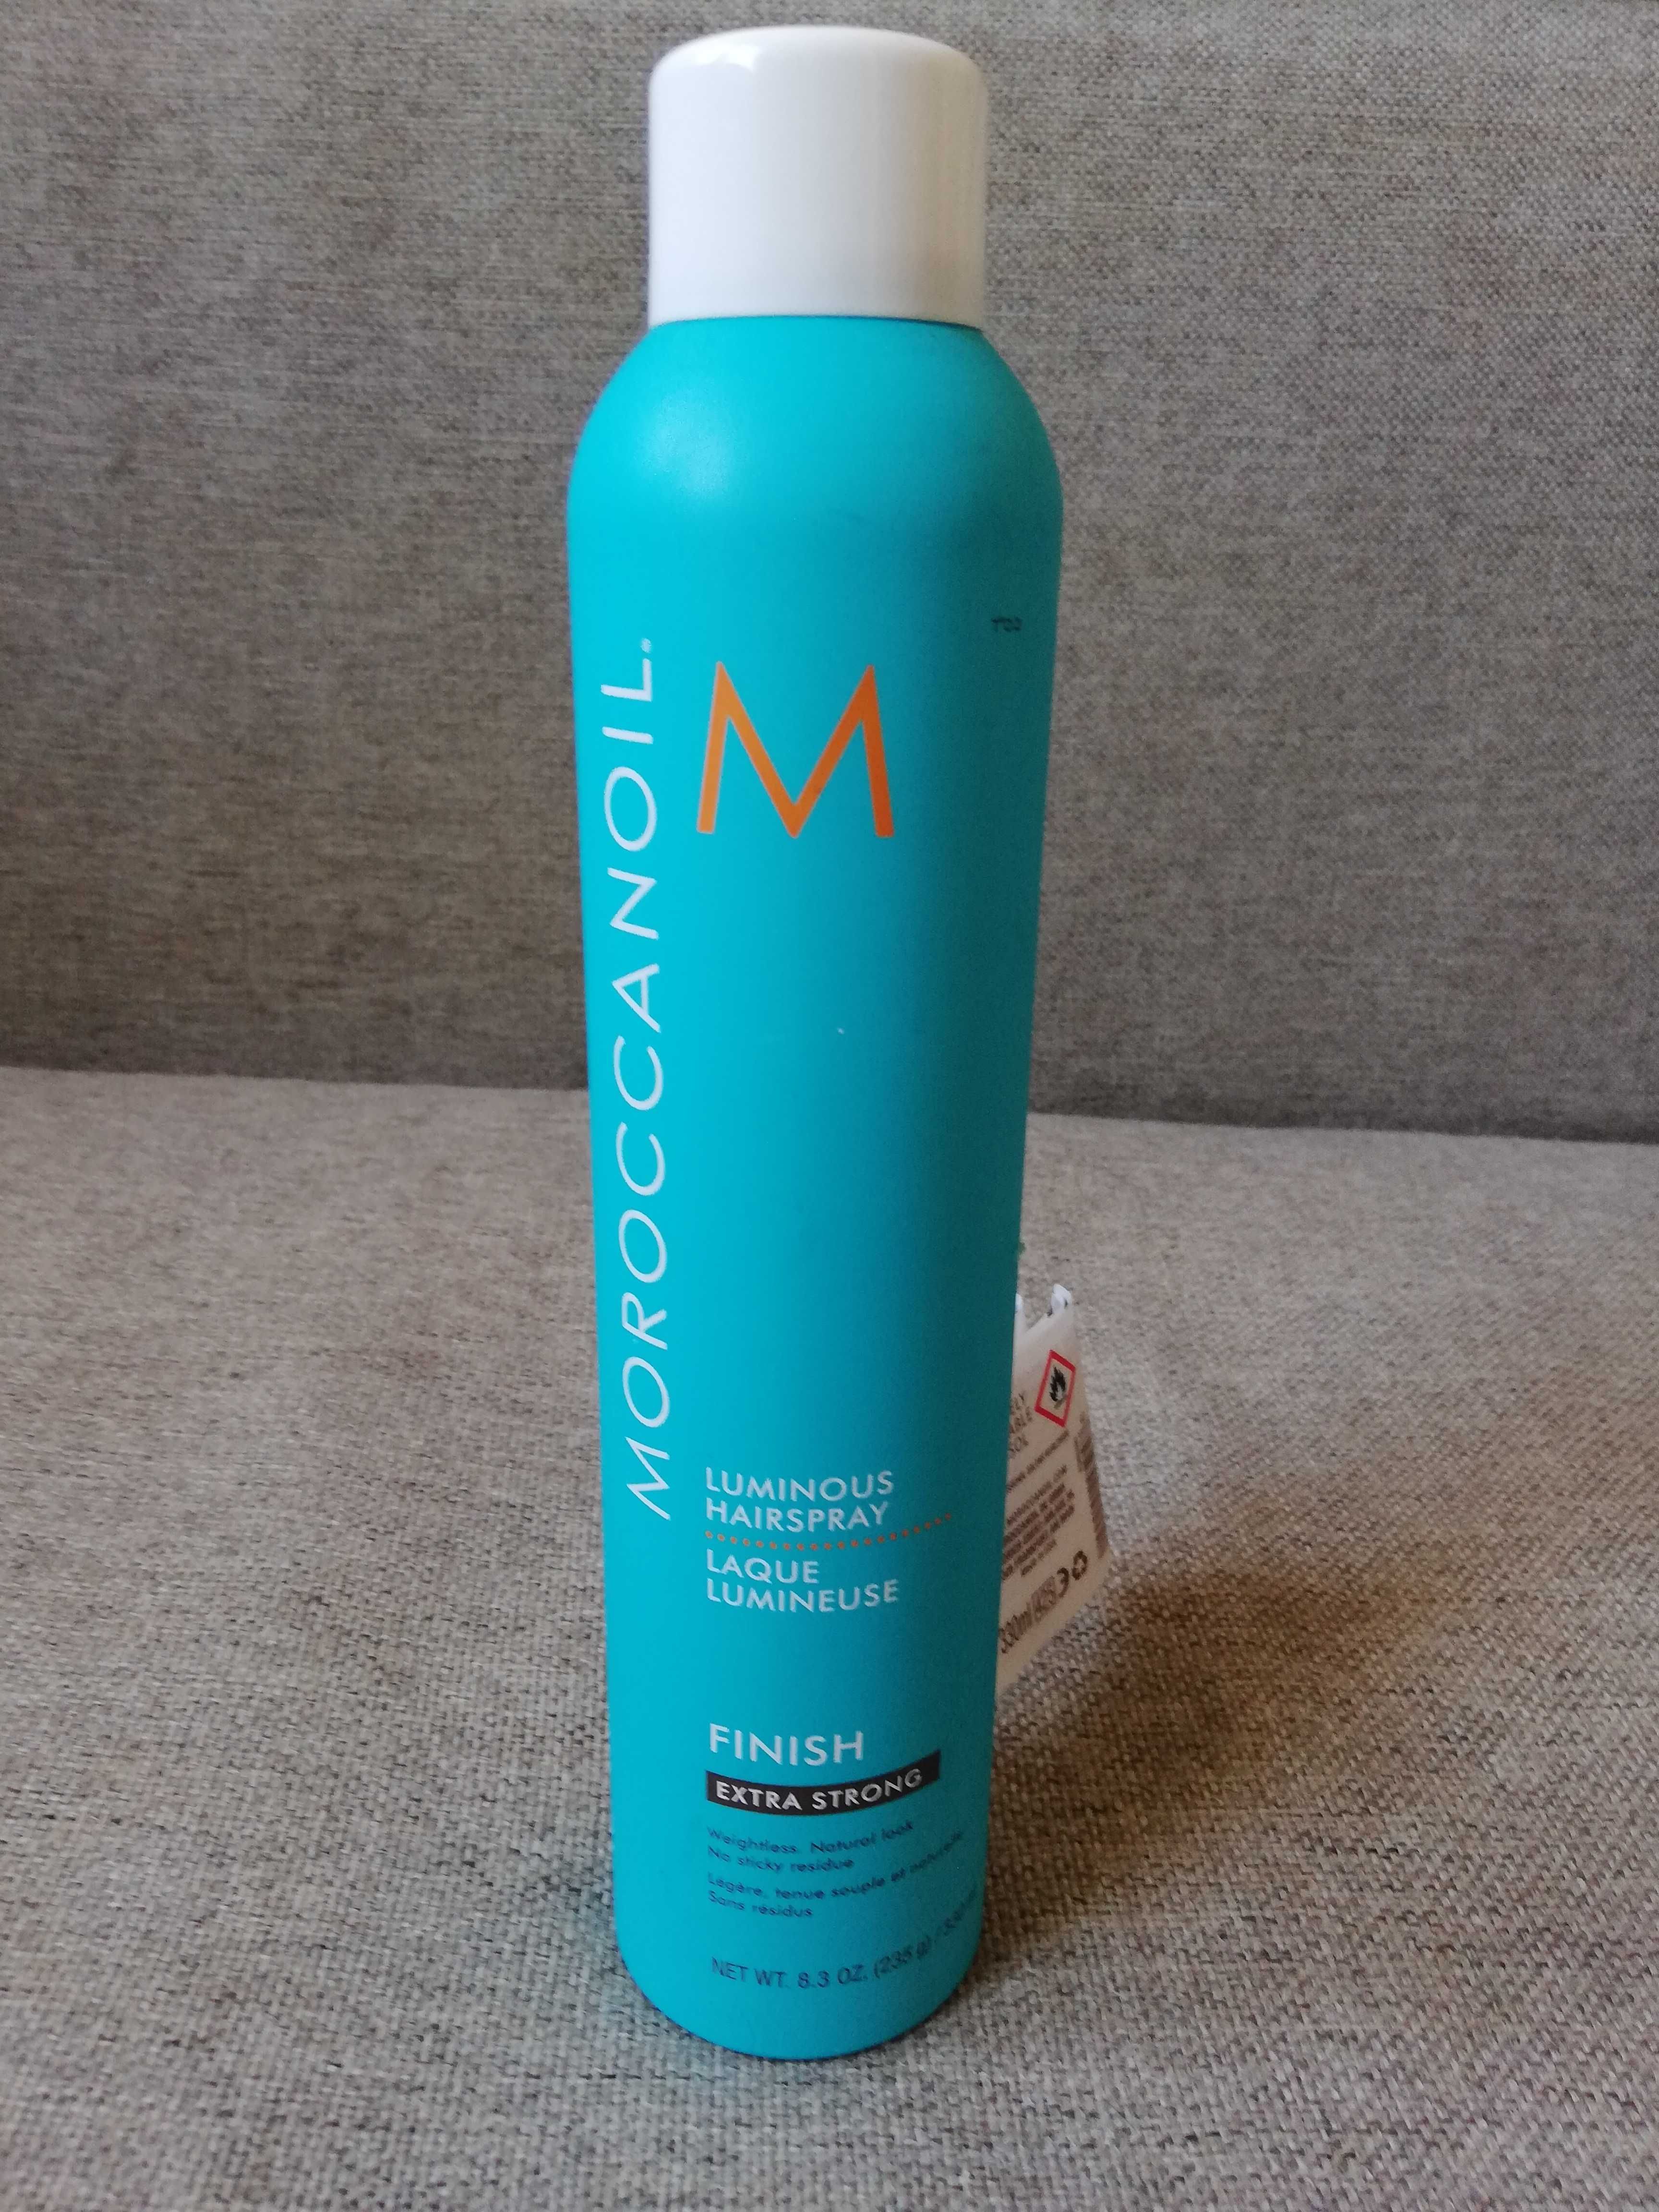 Moroccanoil Luminous Hairspray lakier do włosów ekstra strong 330 ml